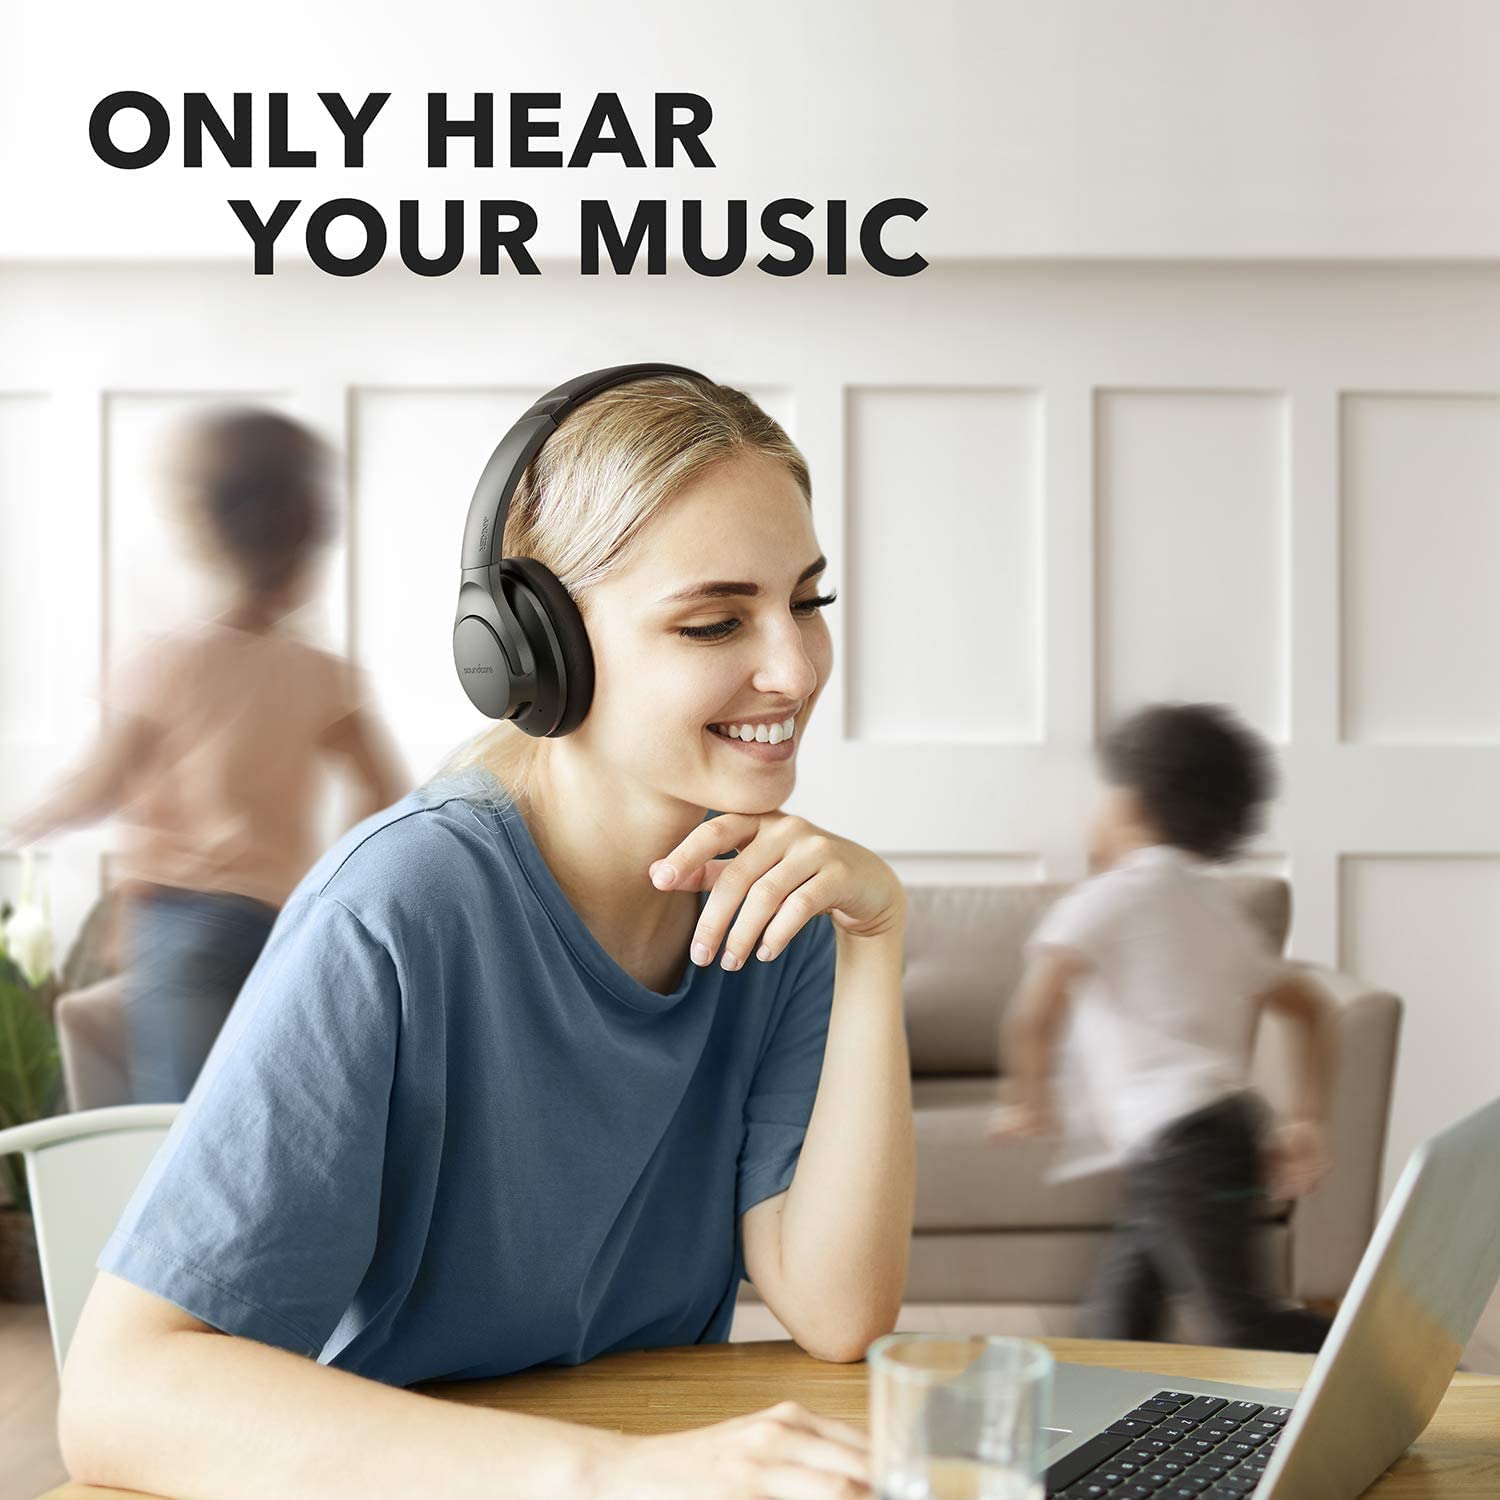 Anker Q20 Hybrid Active Noise Cancelling Headphones